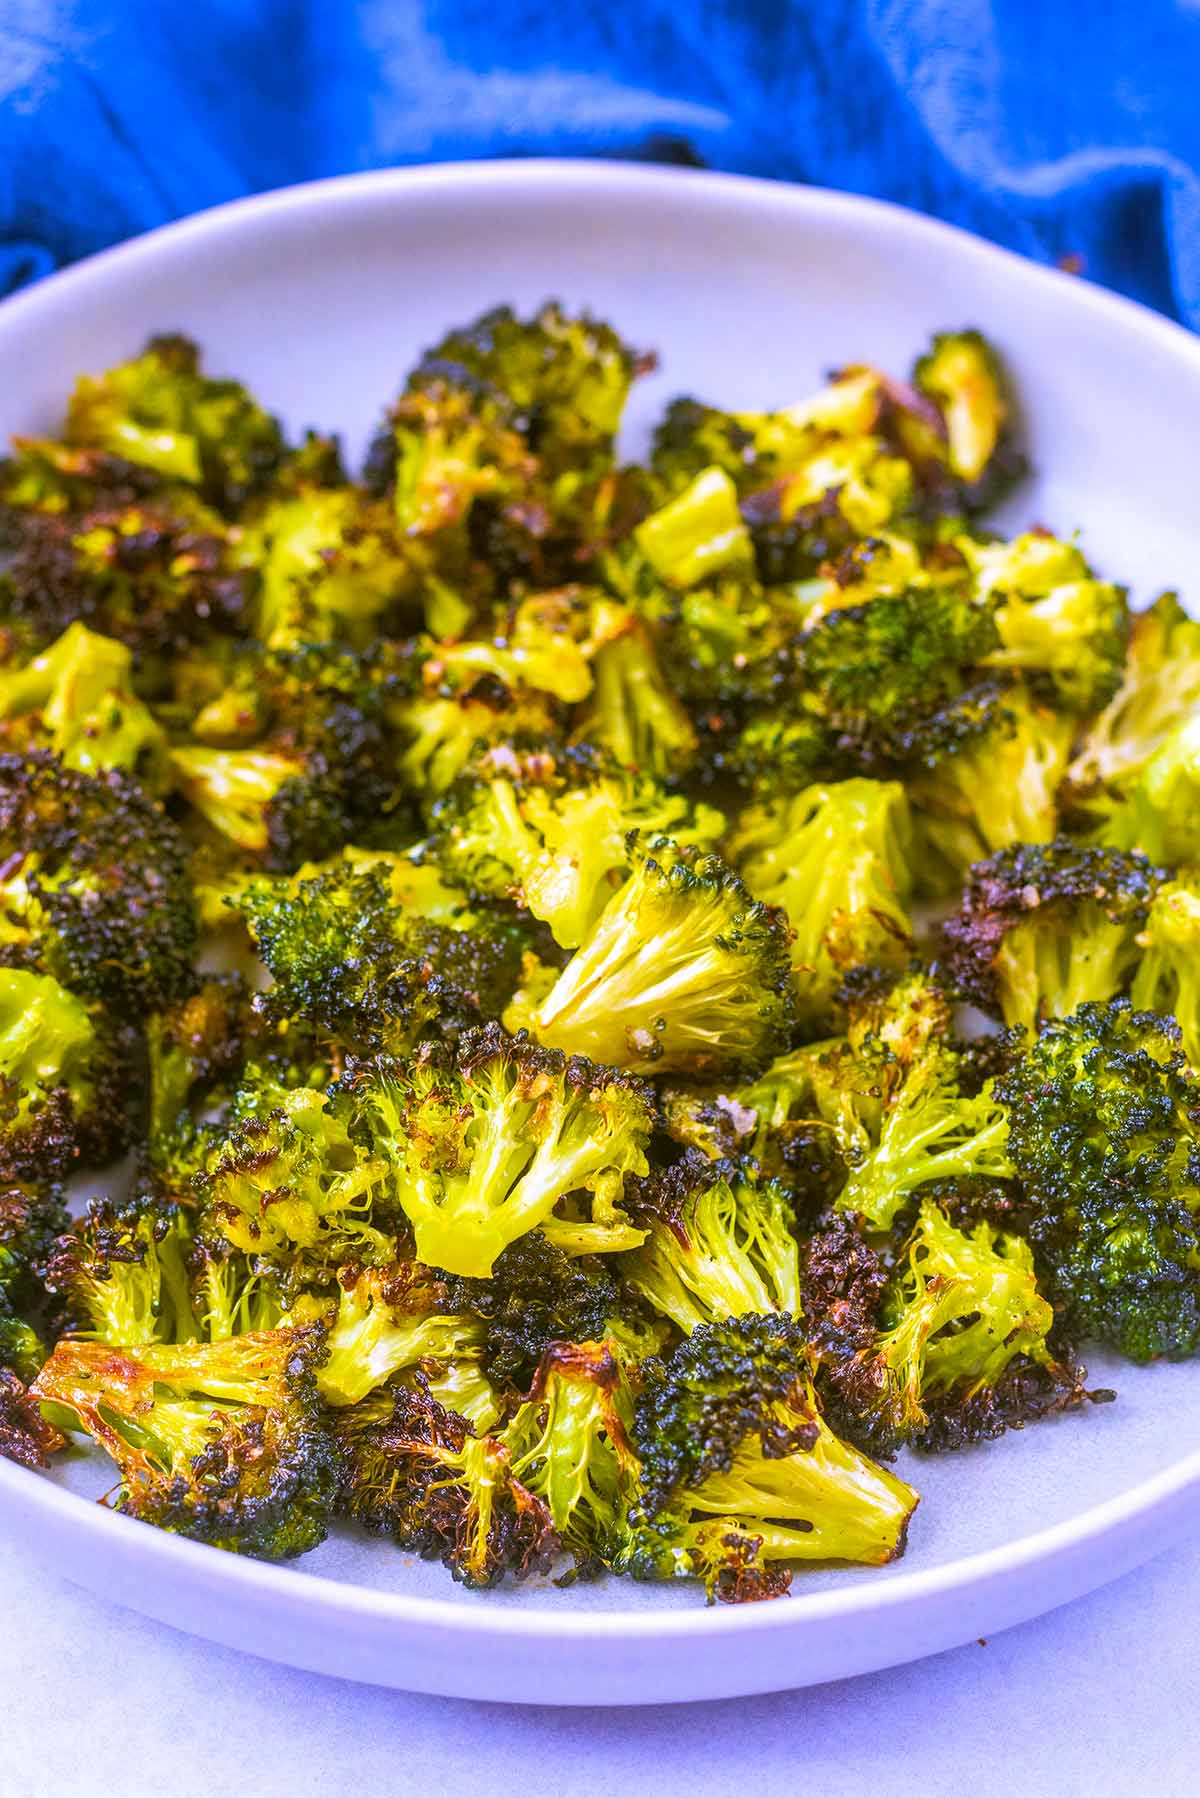 Crispy broccoli in a shallow dish.